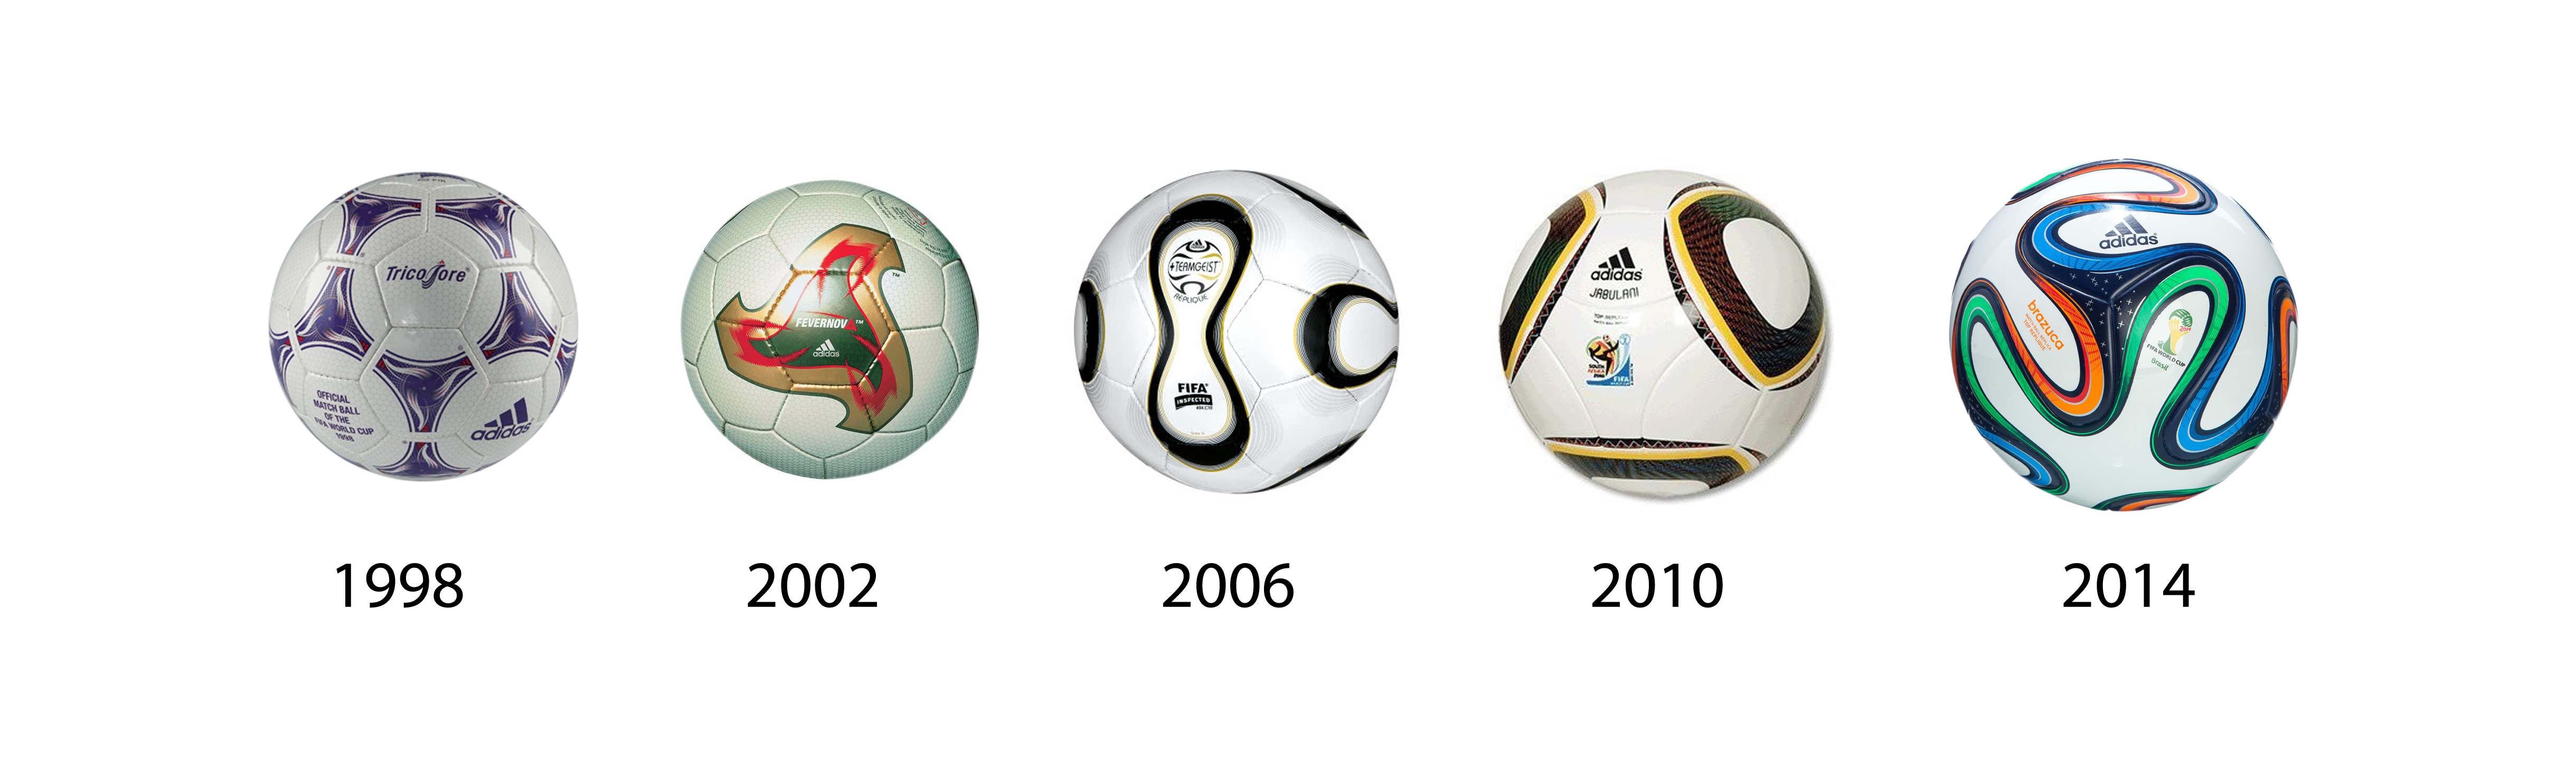 adidas coupe du monde 2010